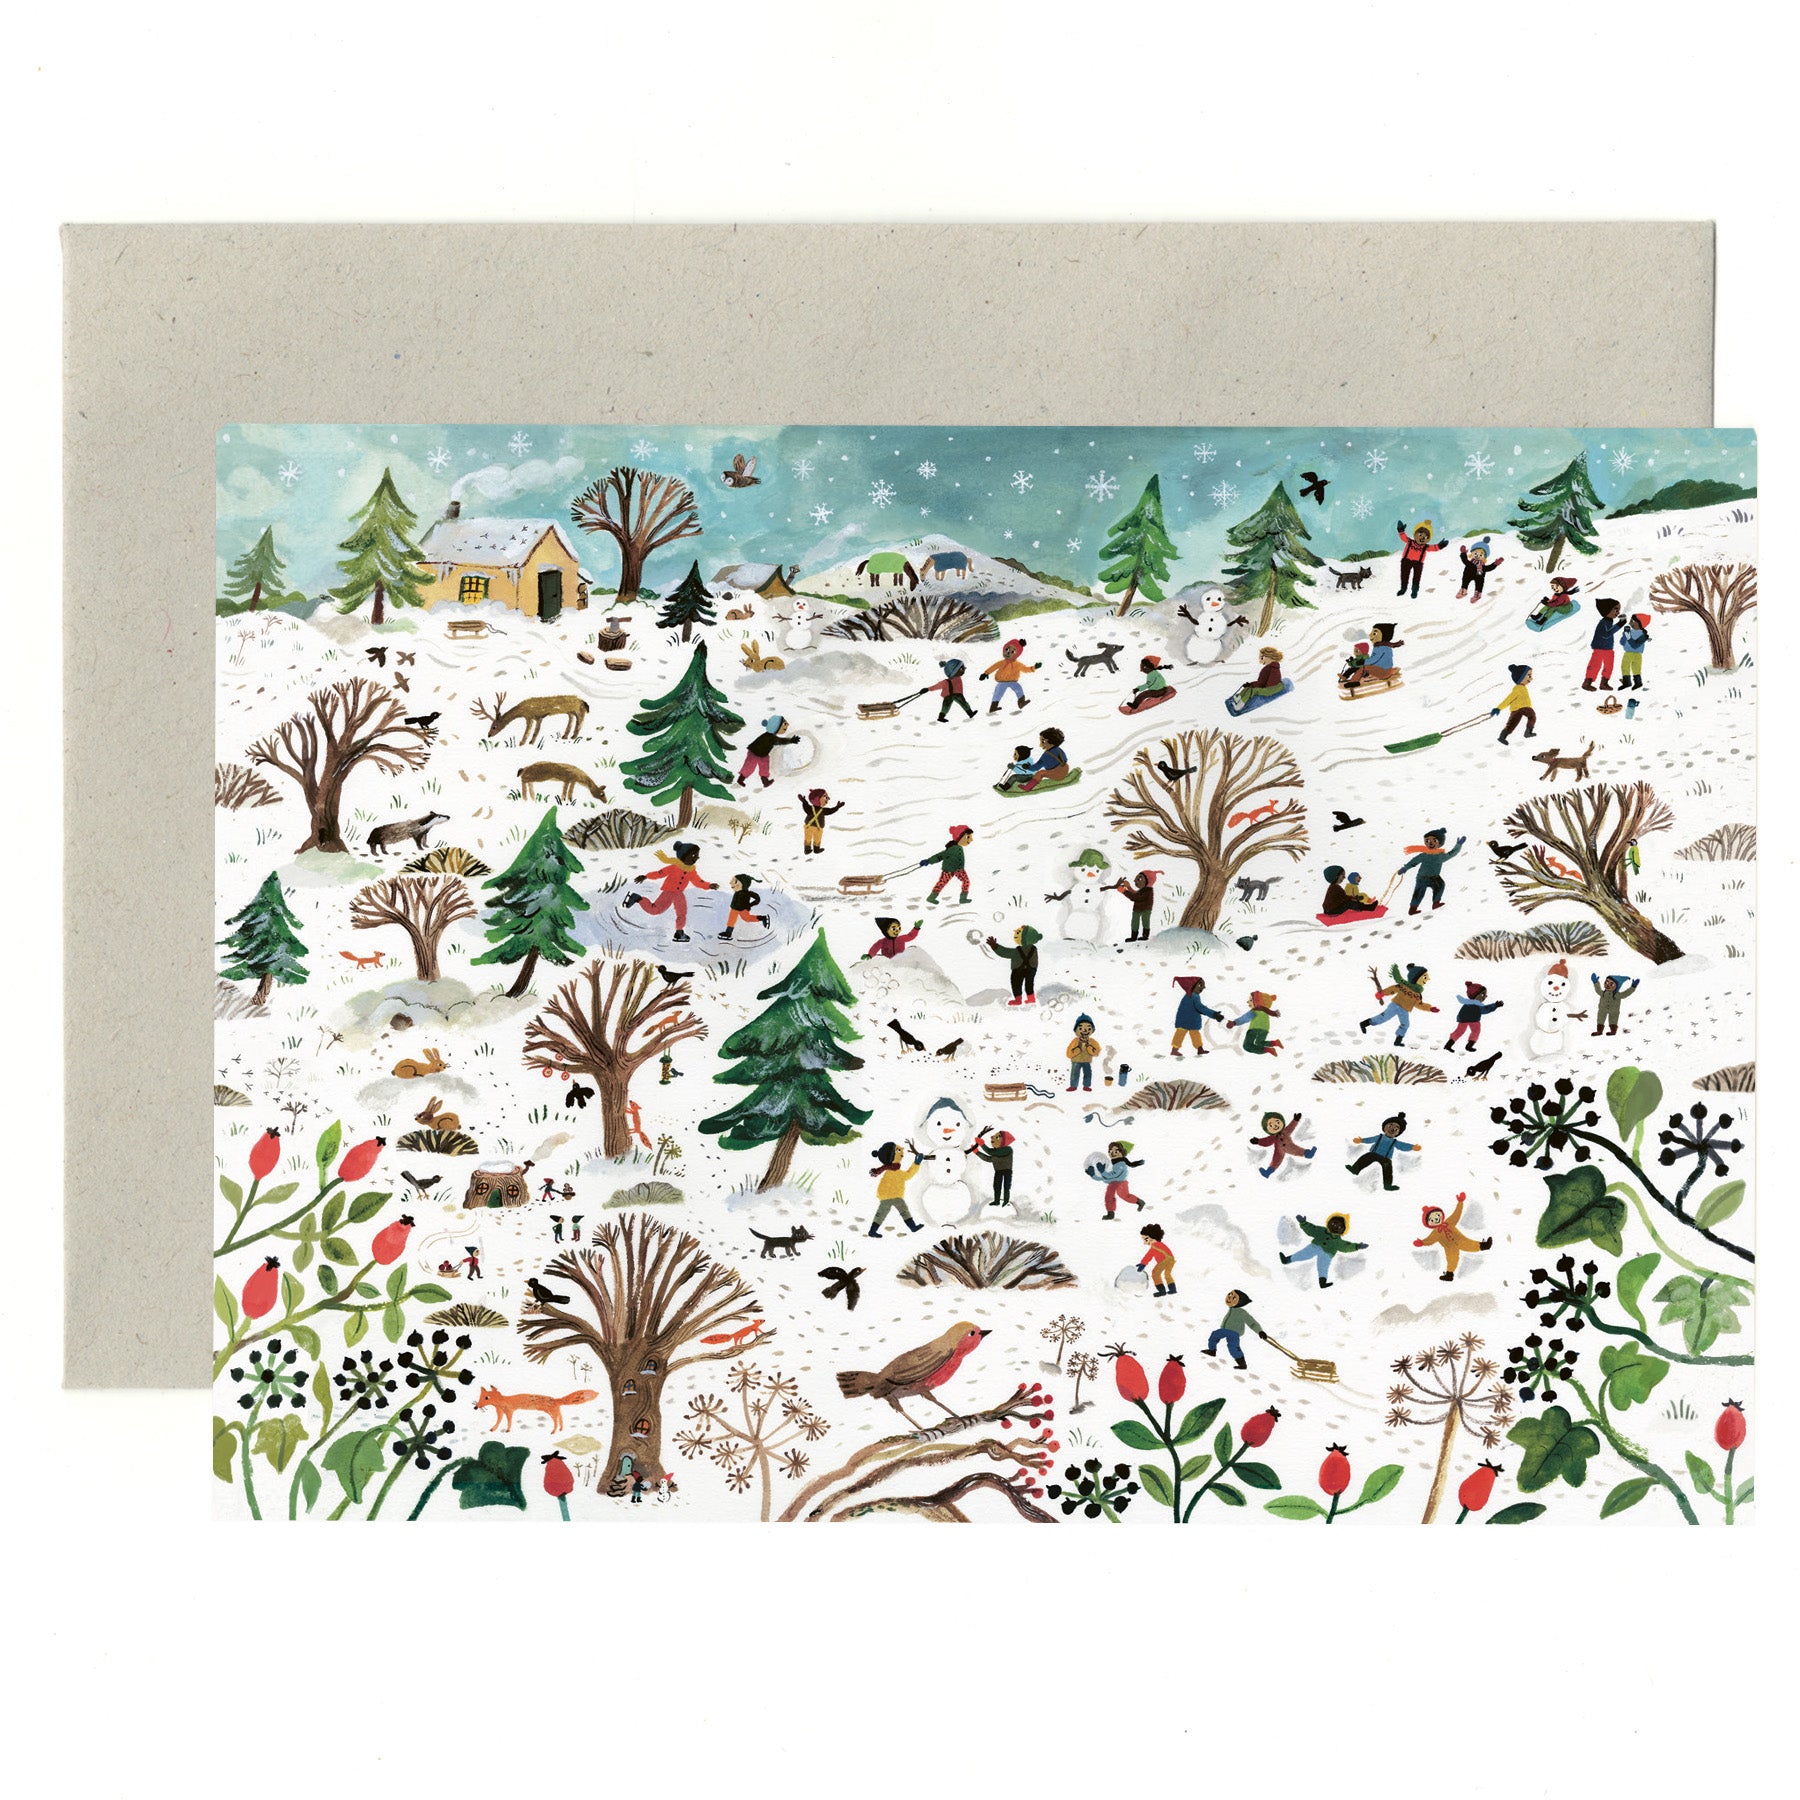 Winter Joy Card